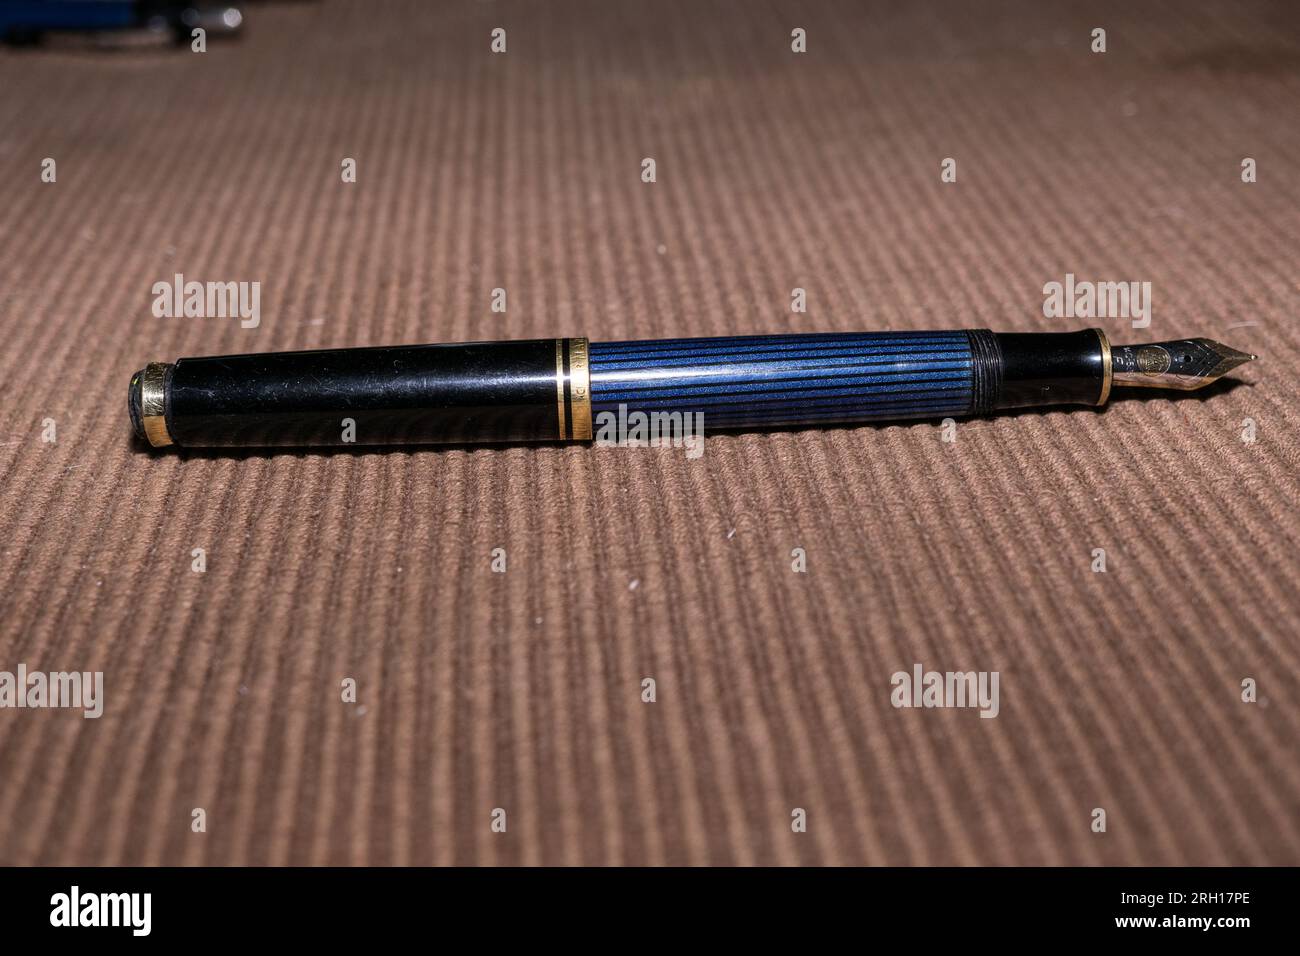 A Pelikan Souveran M600 Fountain Pen lies on a brown placemat.  This is a medium sized Pelikan with a 14 carat gold nib with an iridium tip. Stock Photo